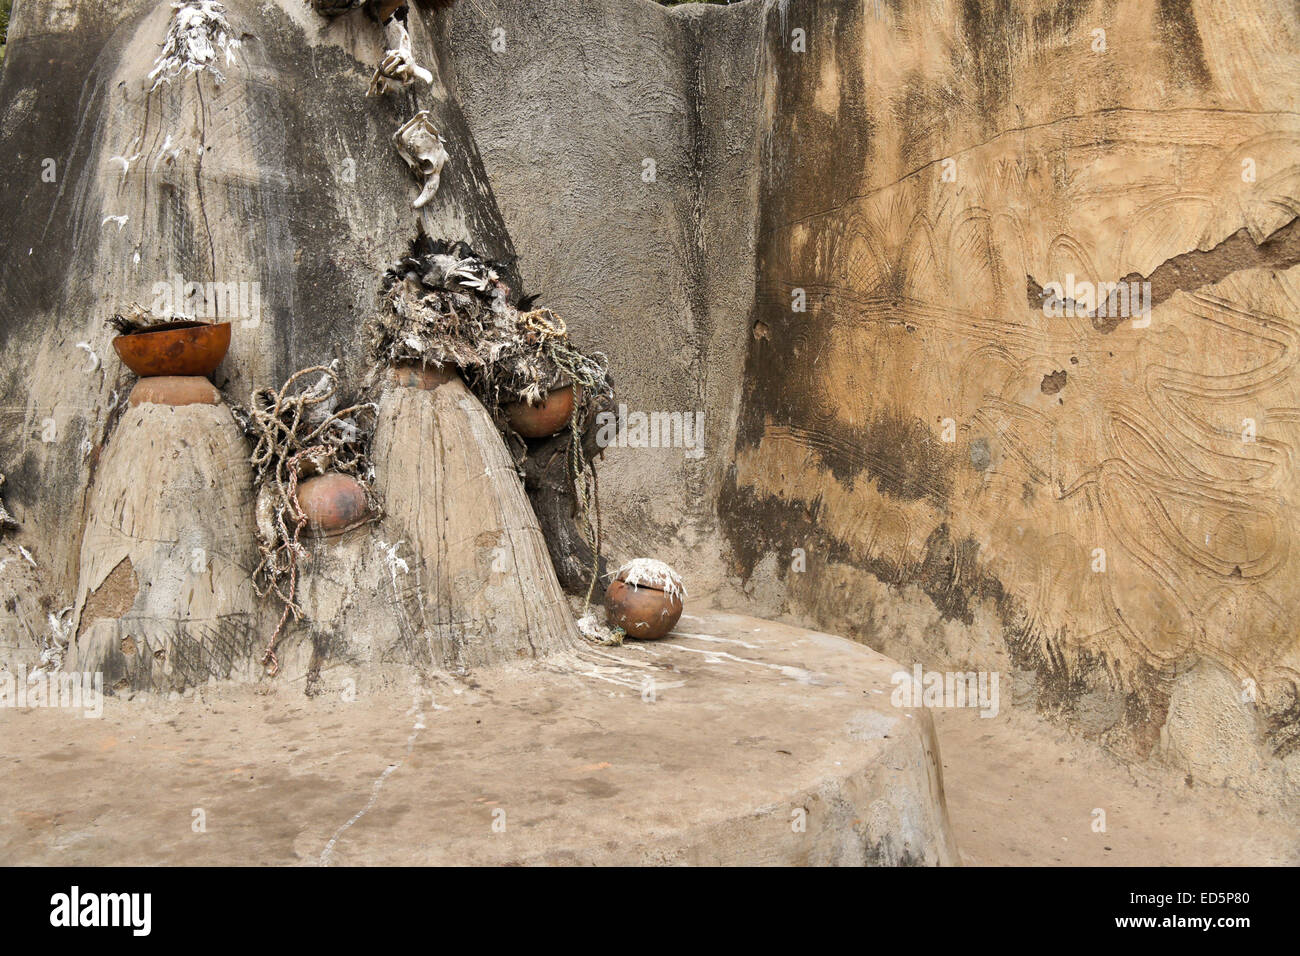 Talensi tribal ancestor shrine with sacrificial offerings, Tongo, Ghana Stock Photo